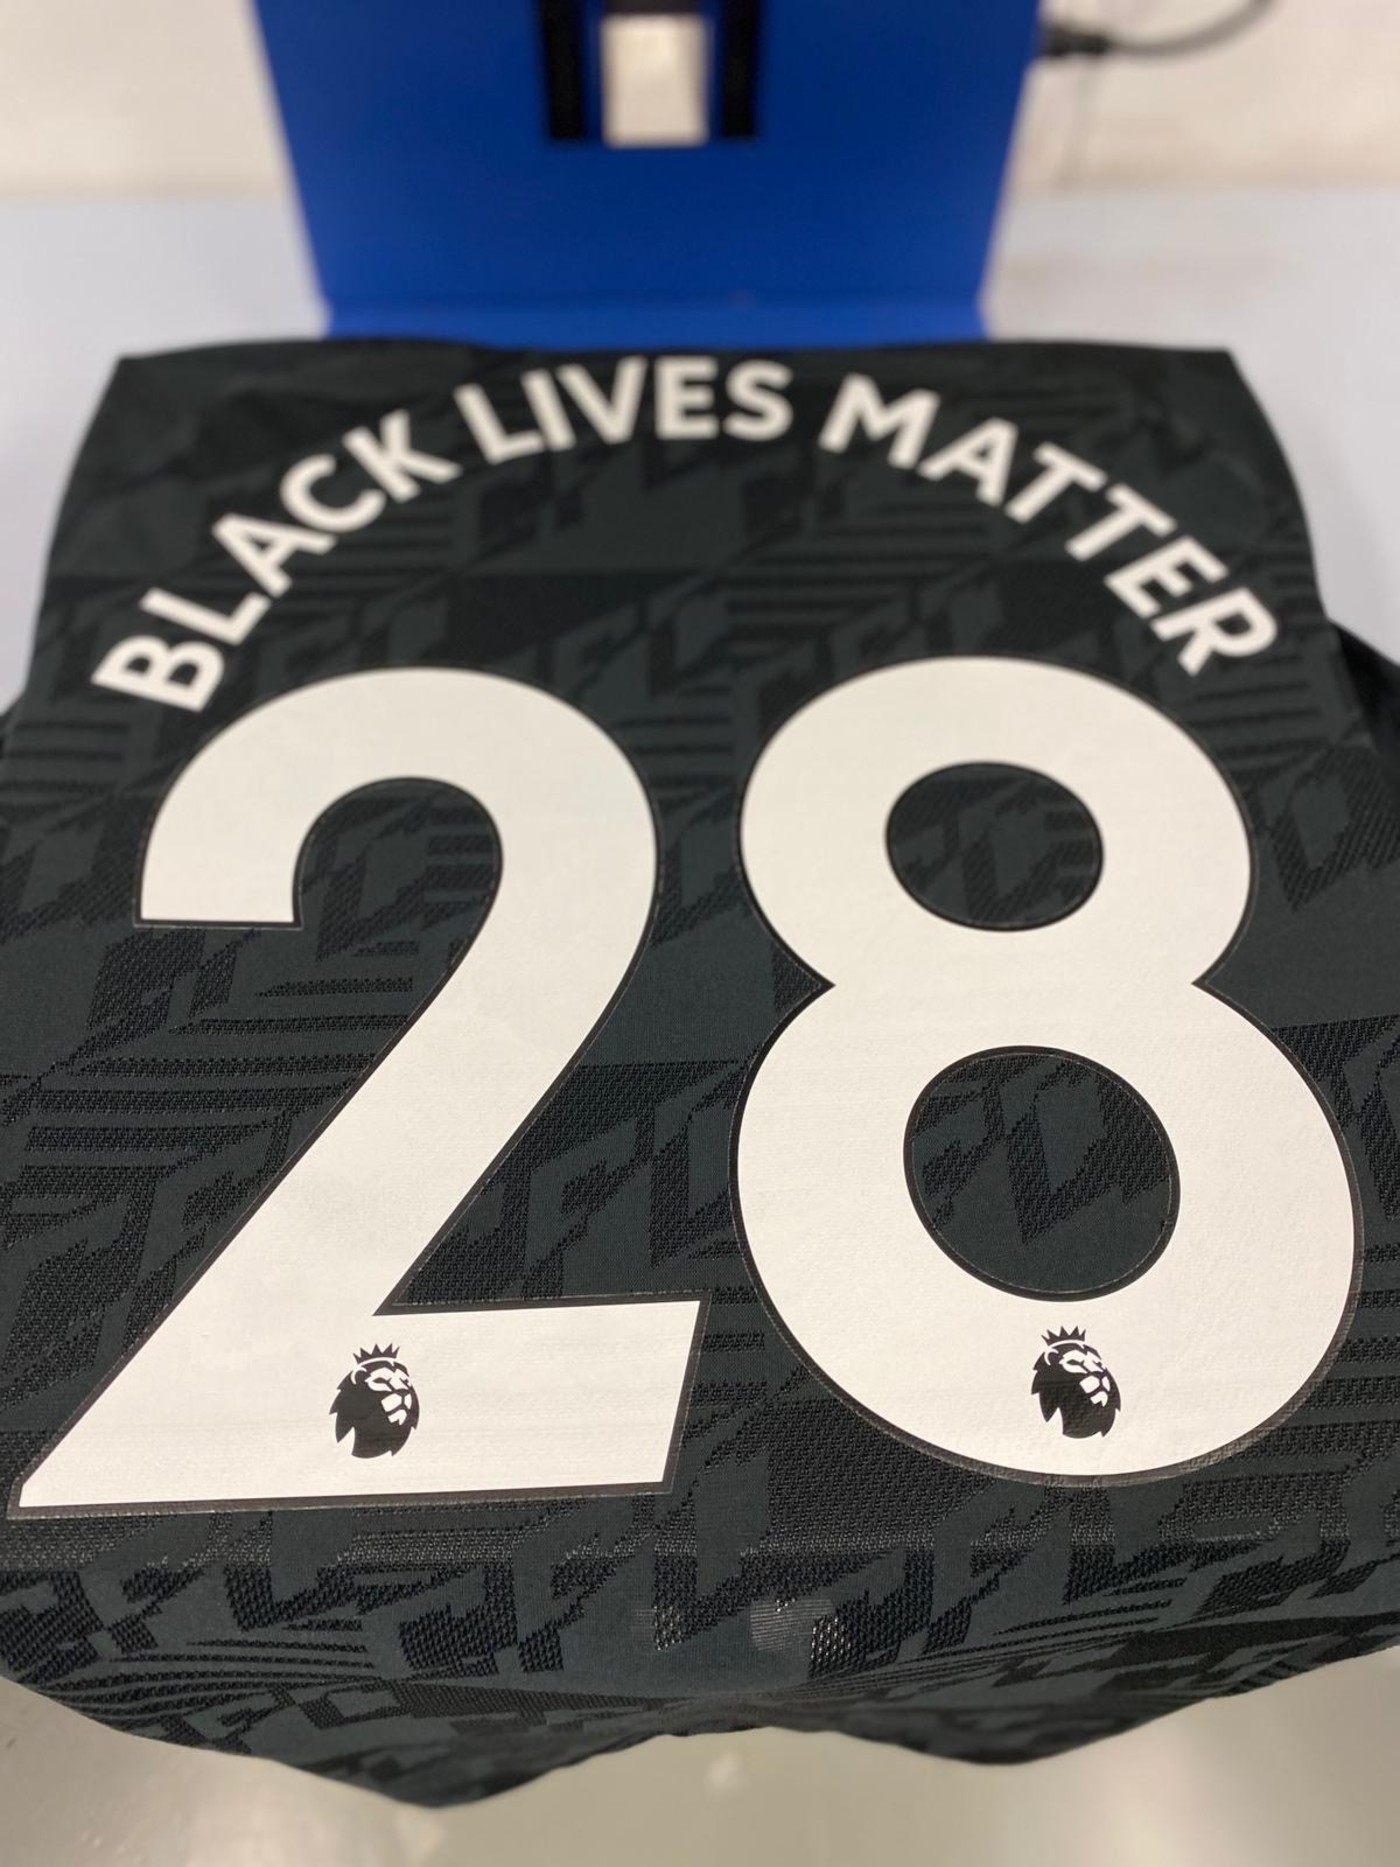 Premier League Teams Black Lives Matter and NHS Logos on Jerseys